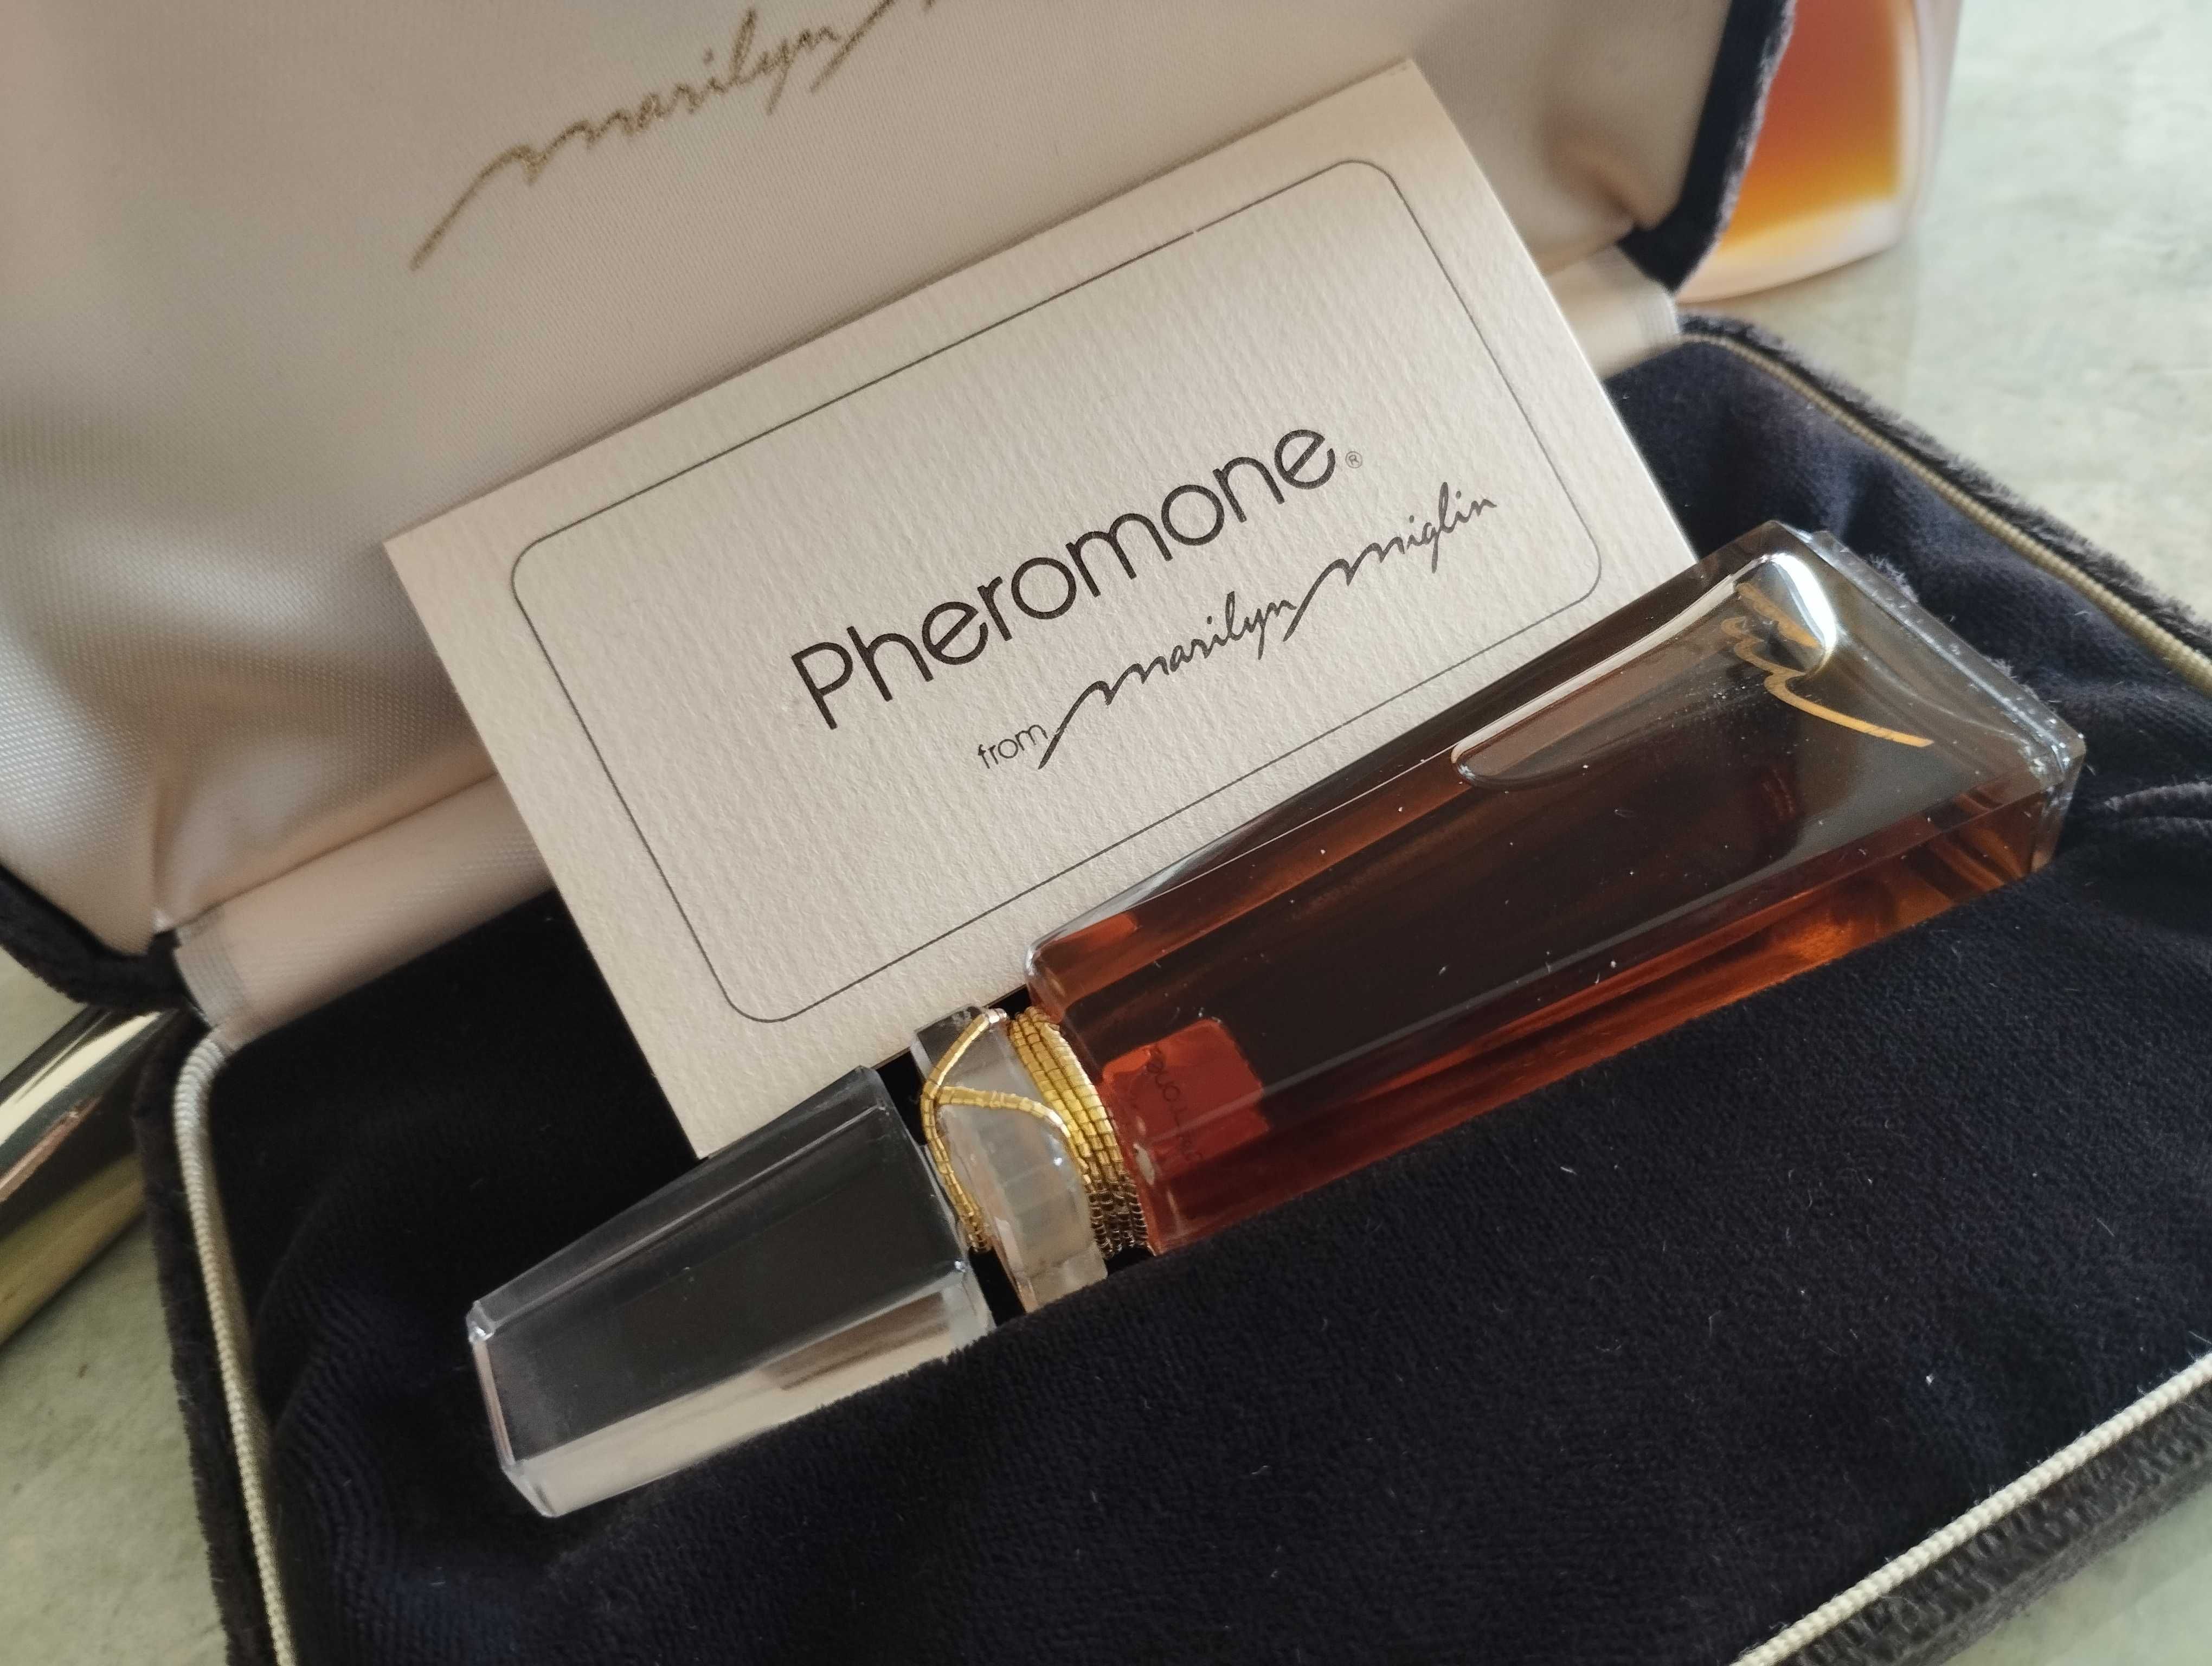 Феромоны pheromone marilyn miglin vintage парфюм